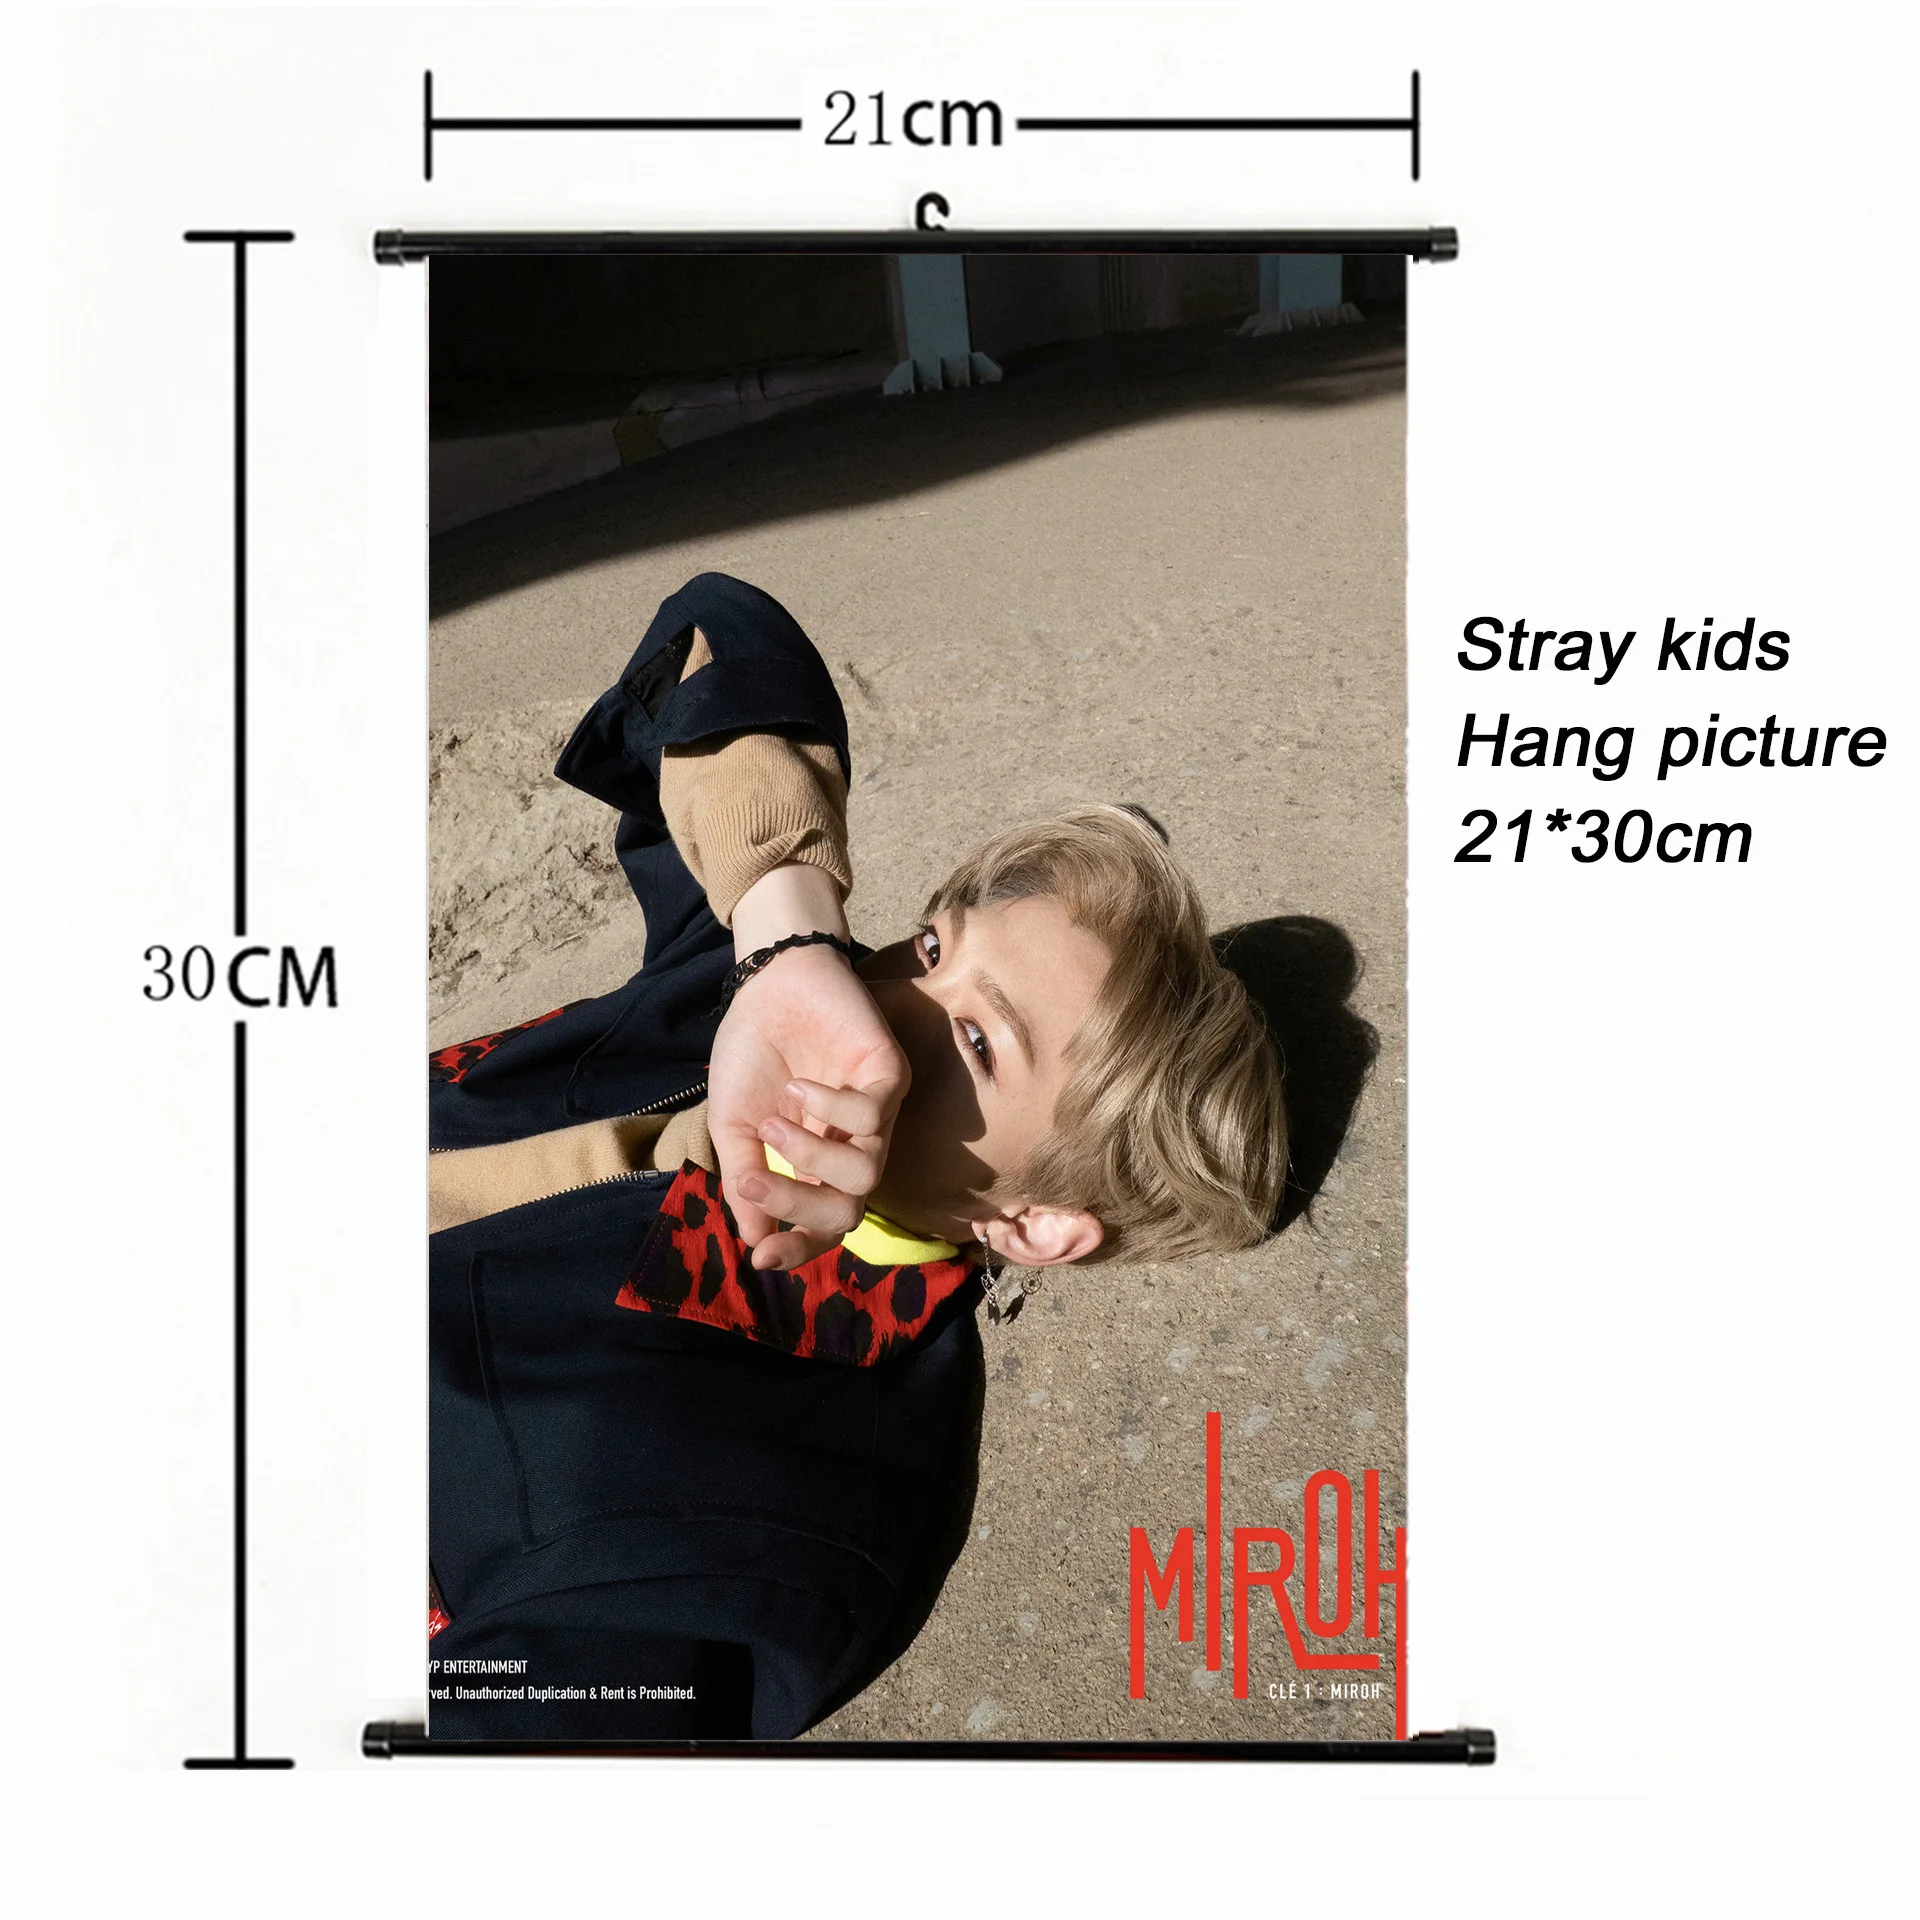 Модный Kpop Stray Kids have picture 21*30 см плакат stray kids MIROH альбом Фотокарта для фанатов Коллекция корейский Канцелярский набор - Цвет: SKD00814